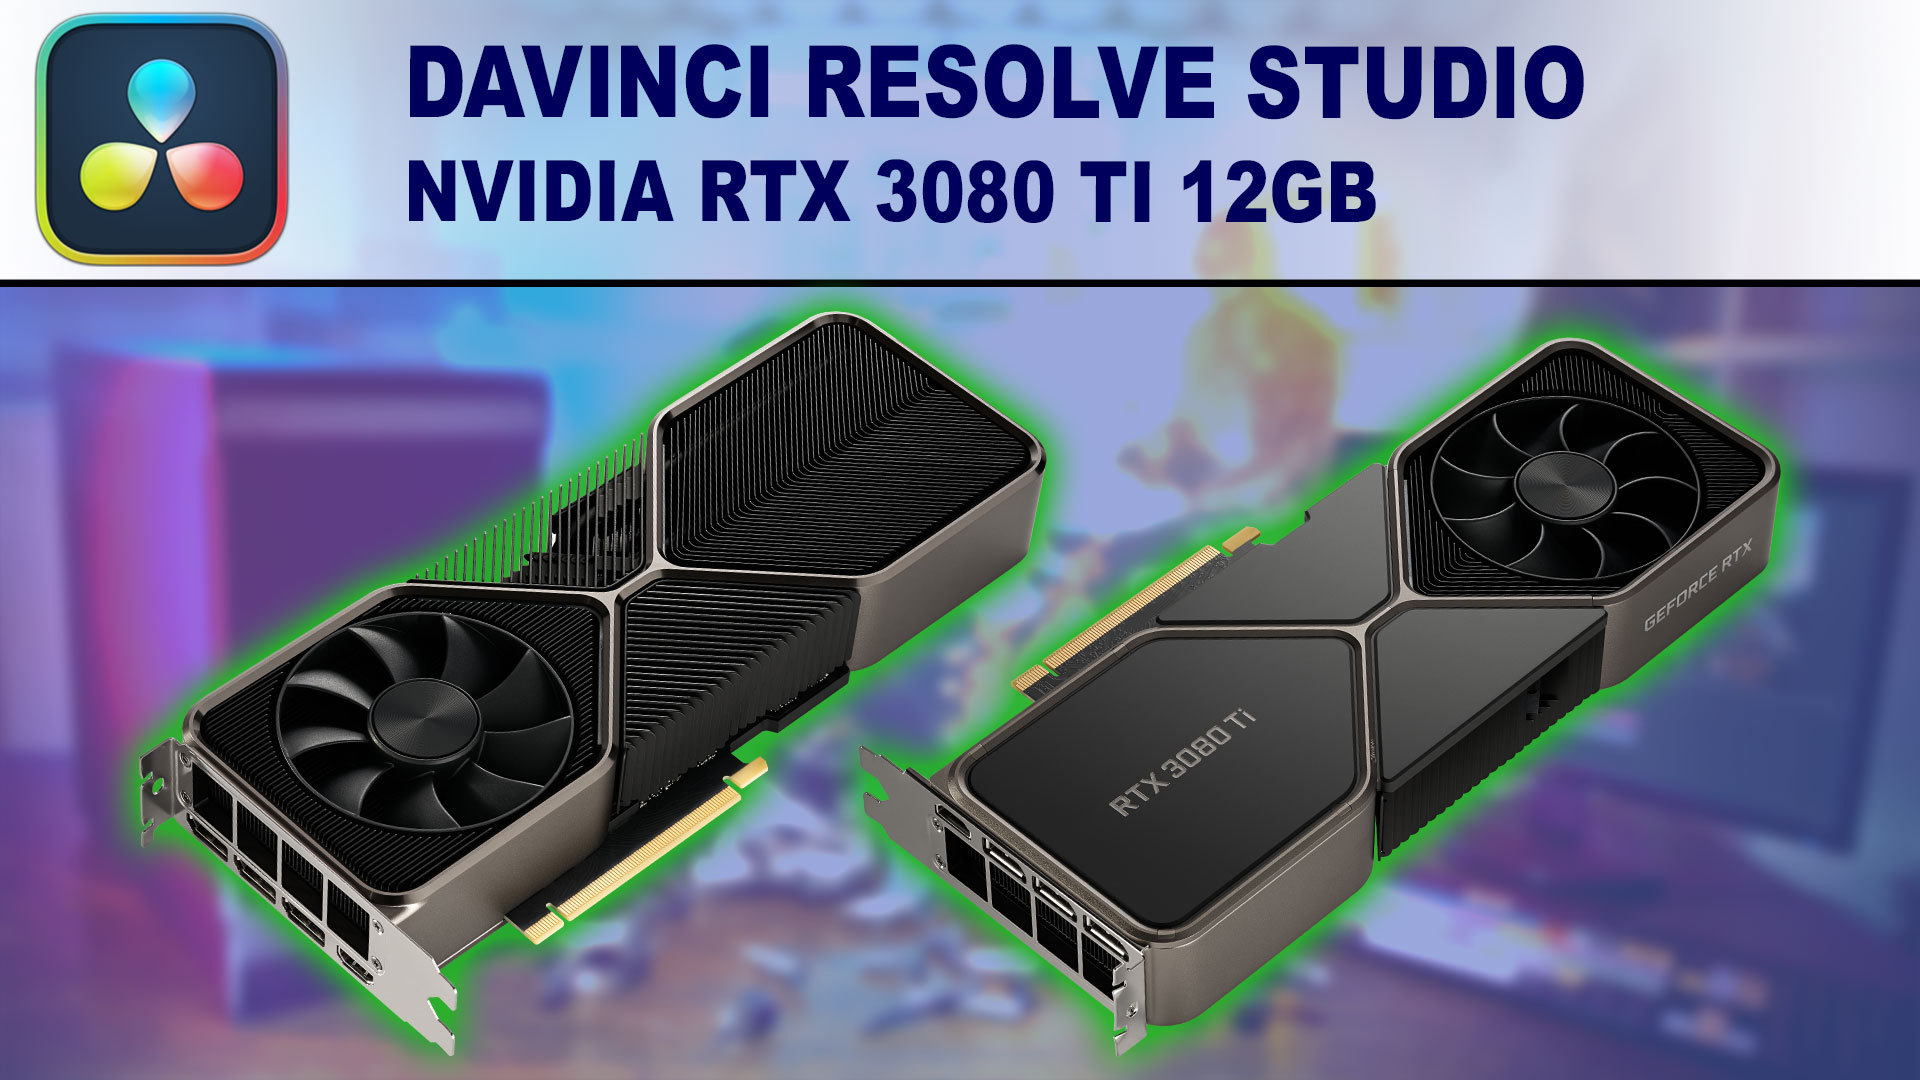 DaVinci Resolve Studio GPU Performance Benchmark - NVIDIA GeForce RTX 3080 Ti 12GB